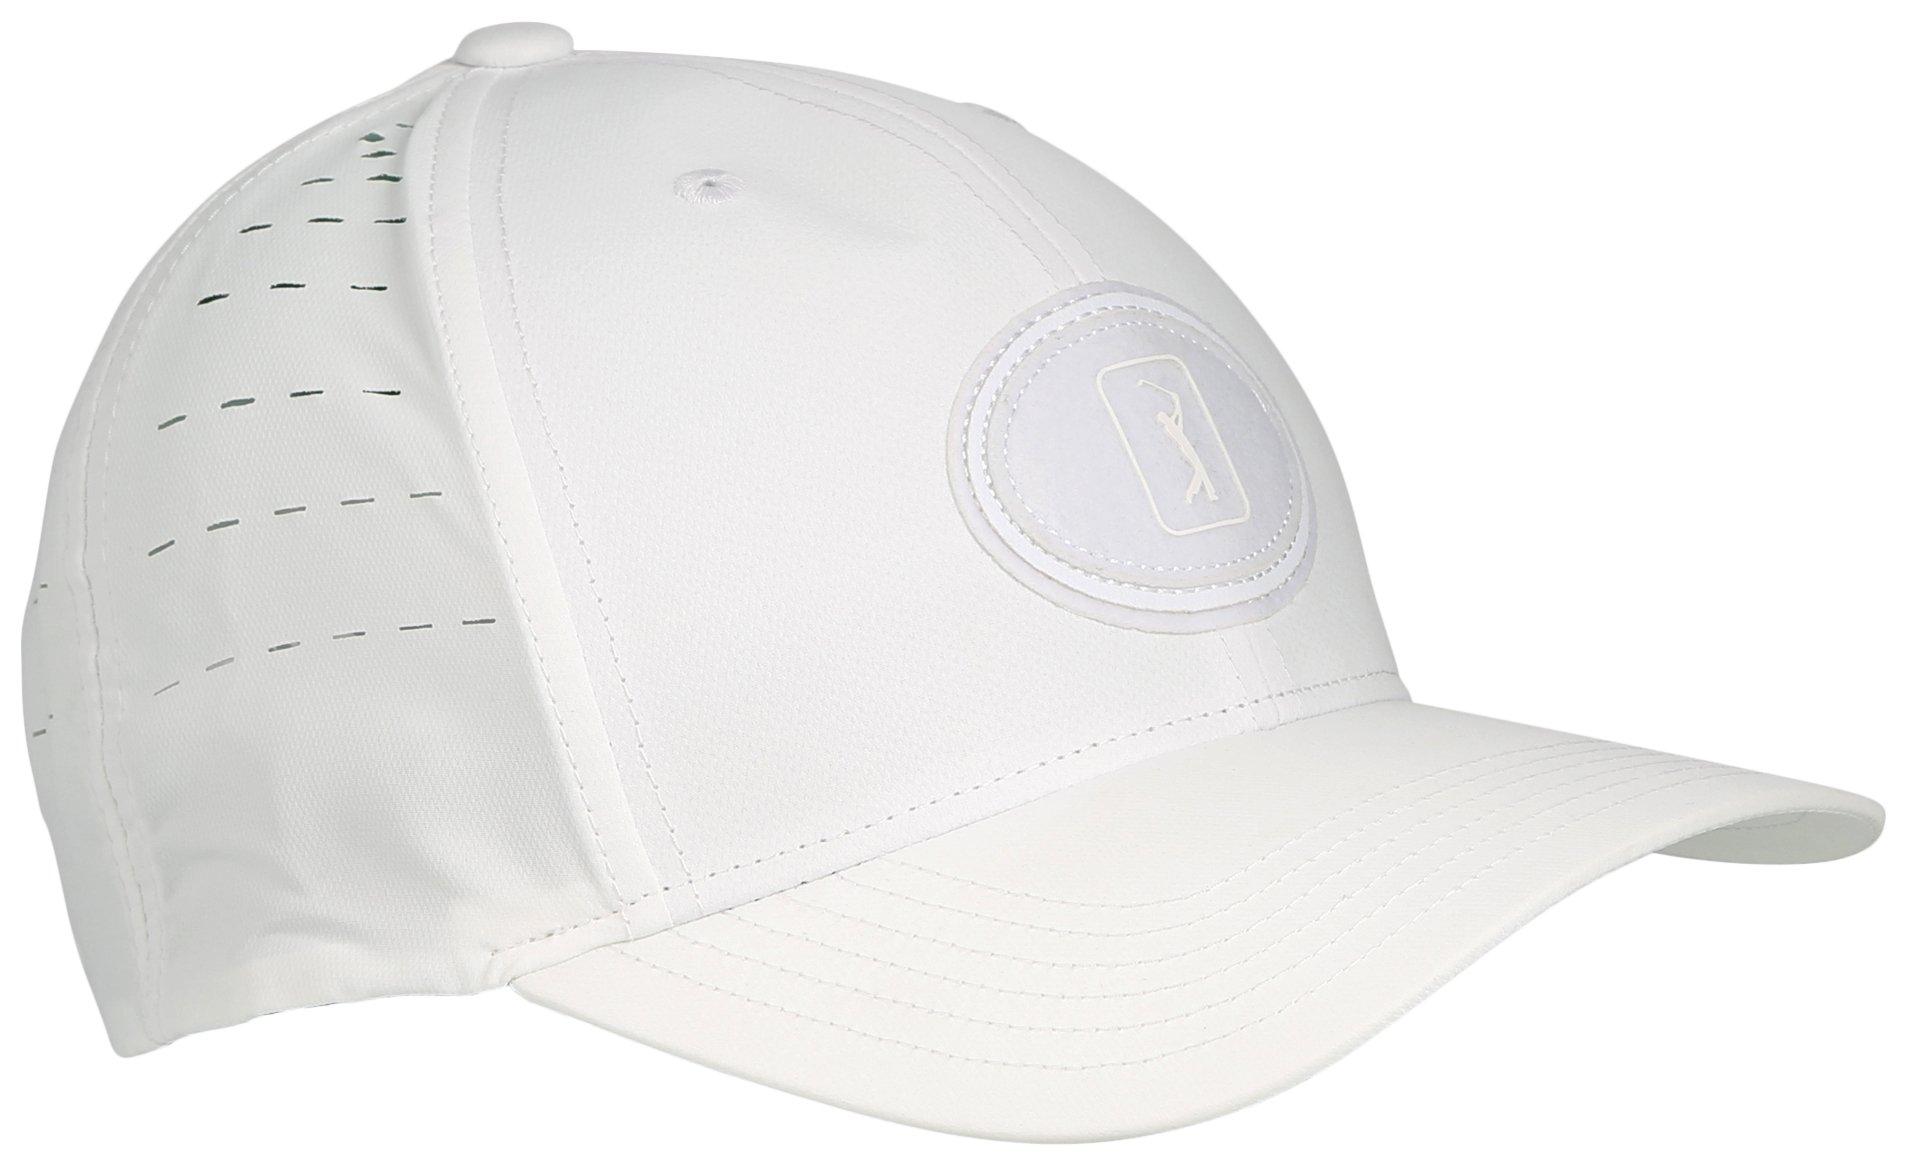 PGA Tour Mens Logo Ventilated Solid Color Adjustable Cap